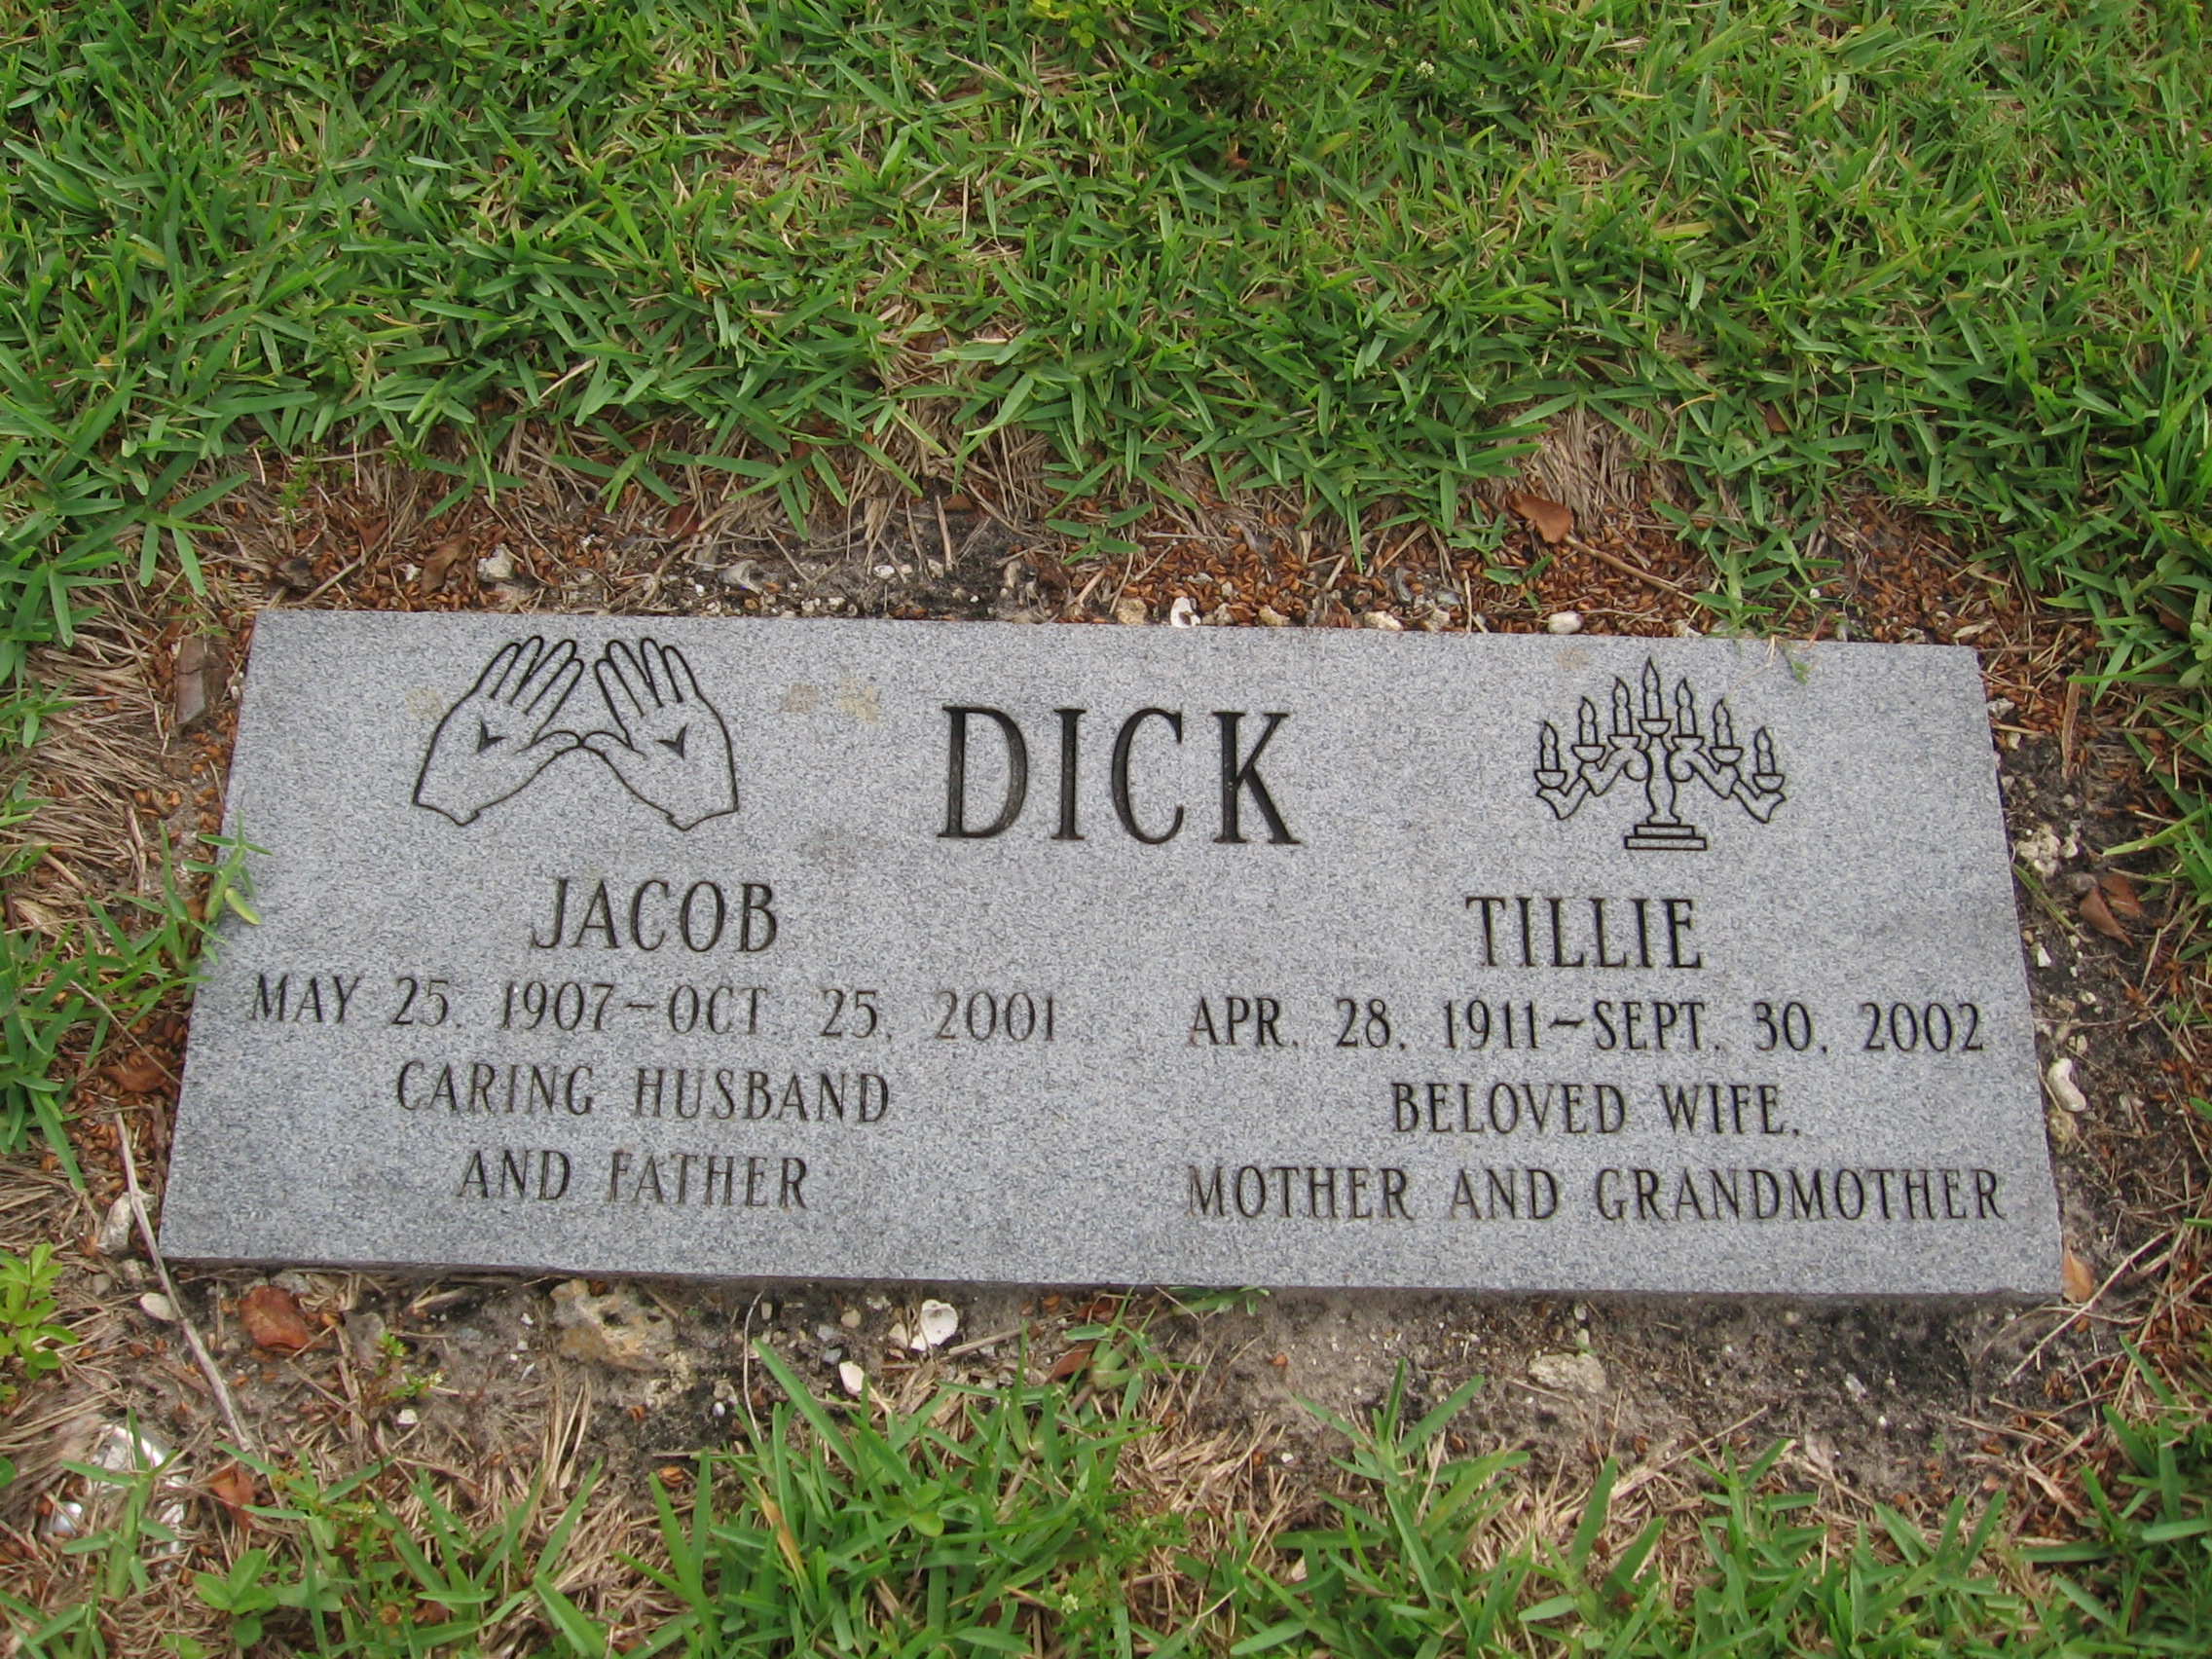 Jacob Dick